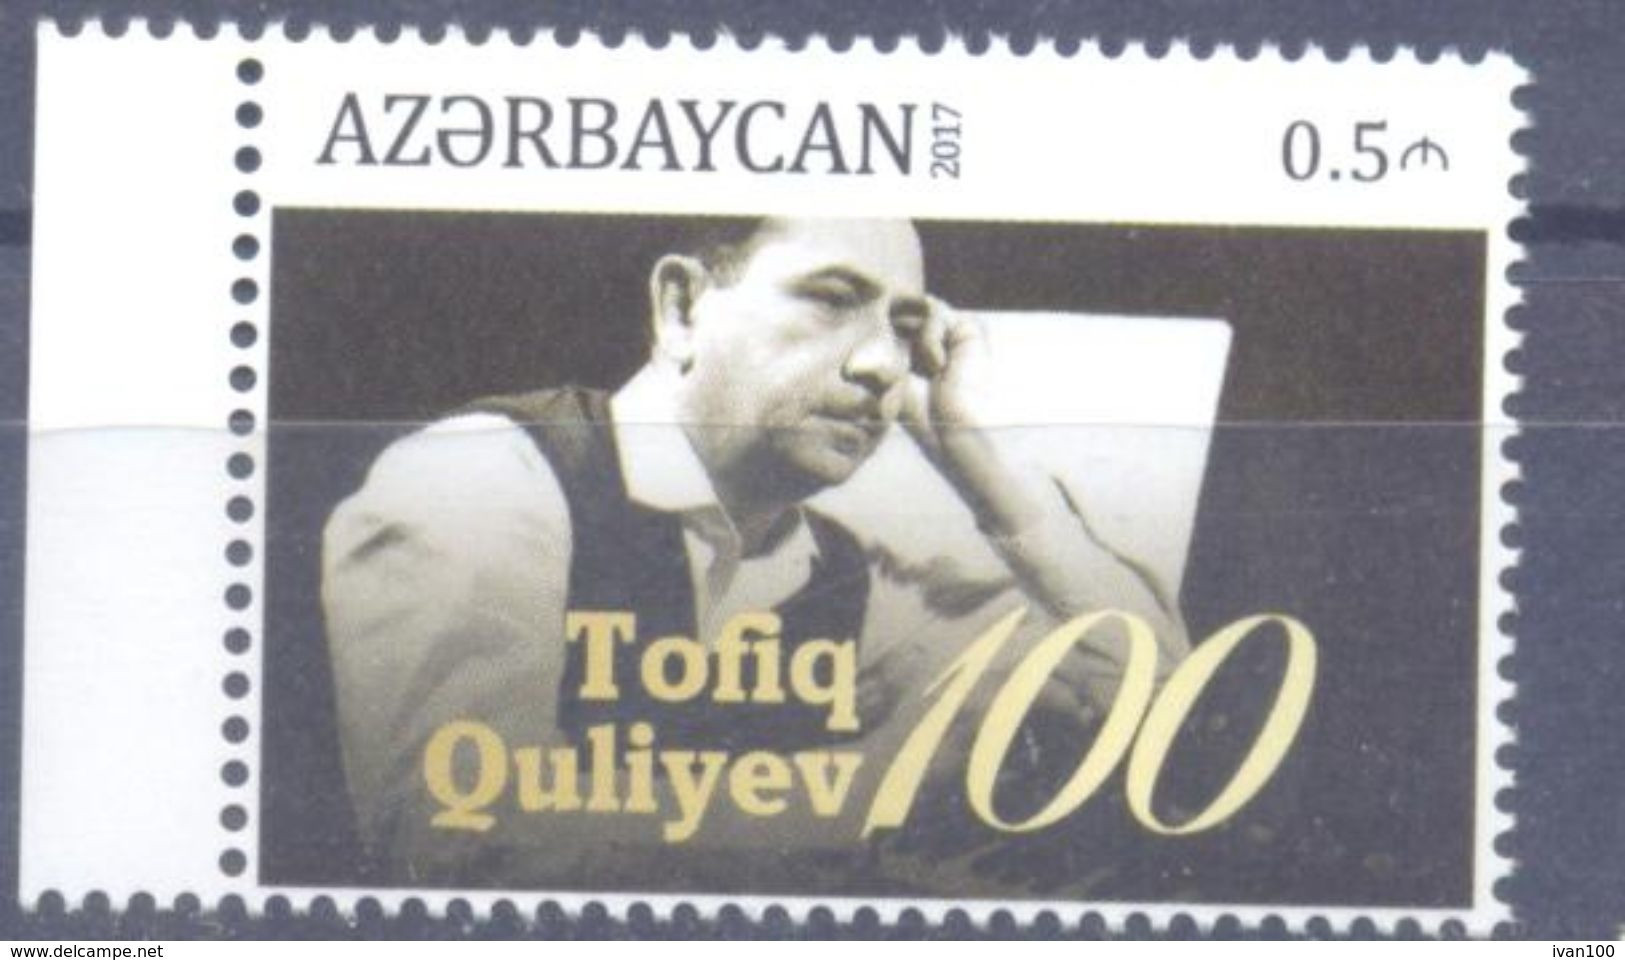 2017. Azerbaijan, T. Guliyev, Composer, 1v, Mint/** - Aserbaidschan